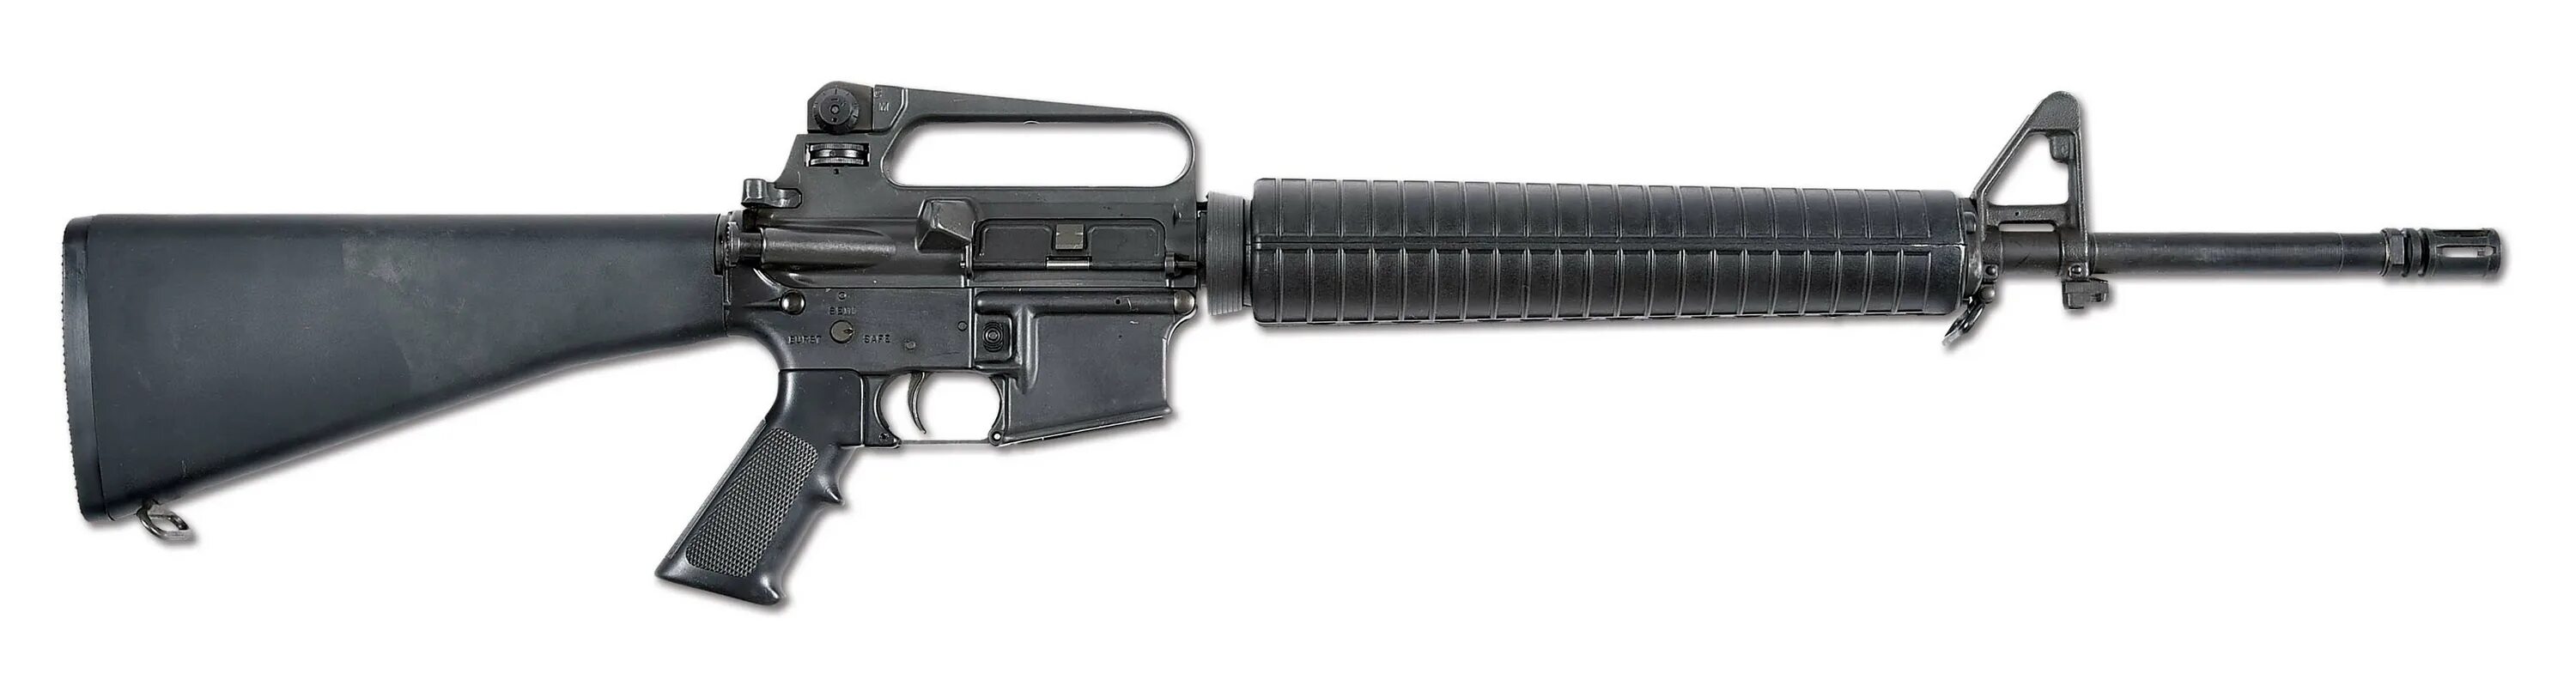 Винтовка m16a1. Винтовка m16a1 Colt. Штурмовая винтовка CYMA Colt model 603. M16 винтовка.